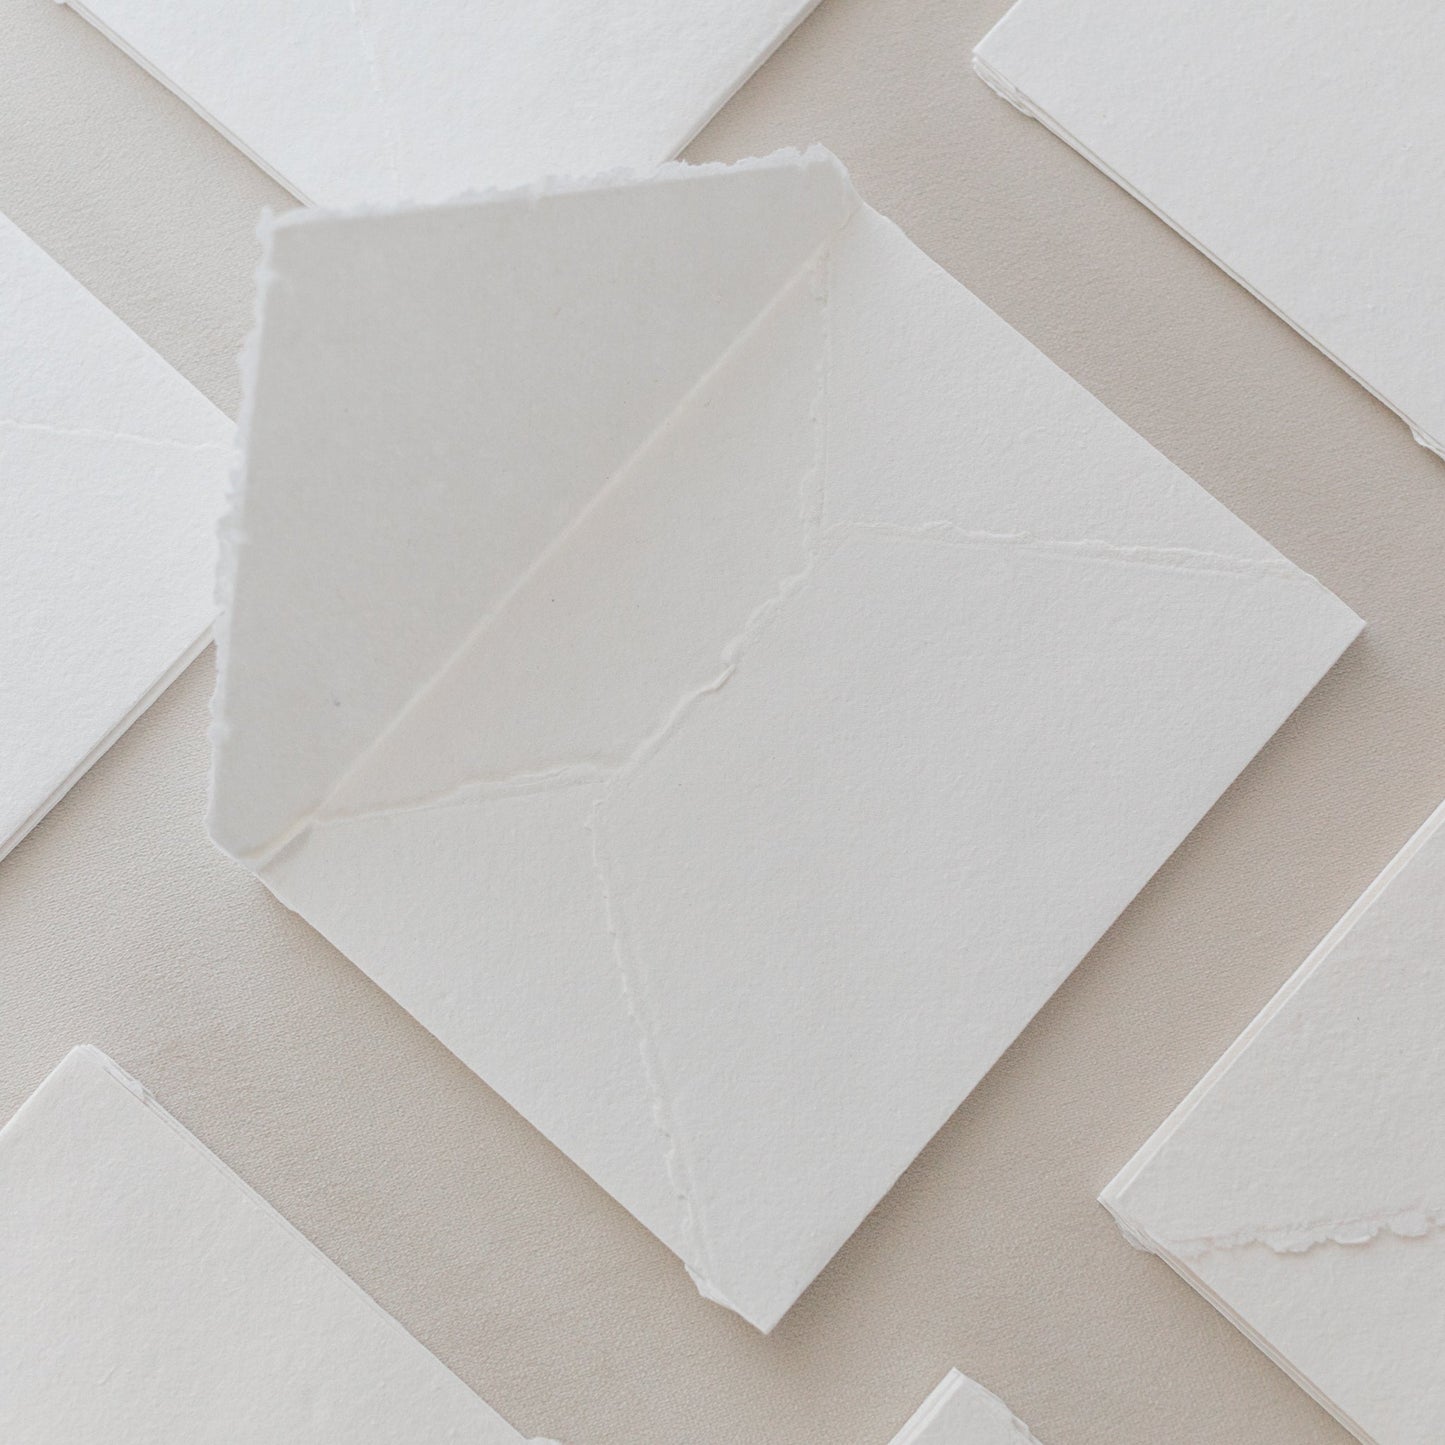 Seconds Handmade Paper Envelopes